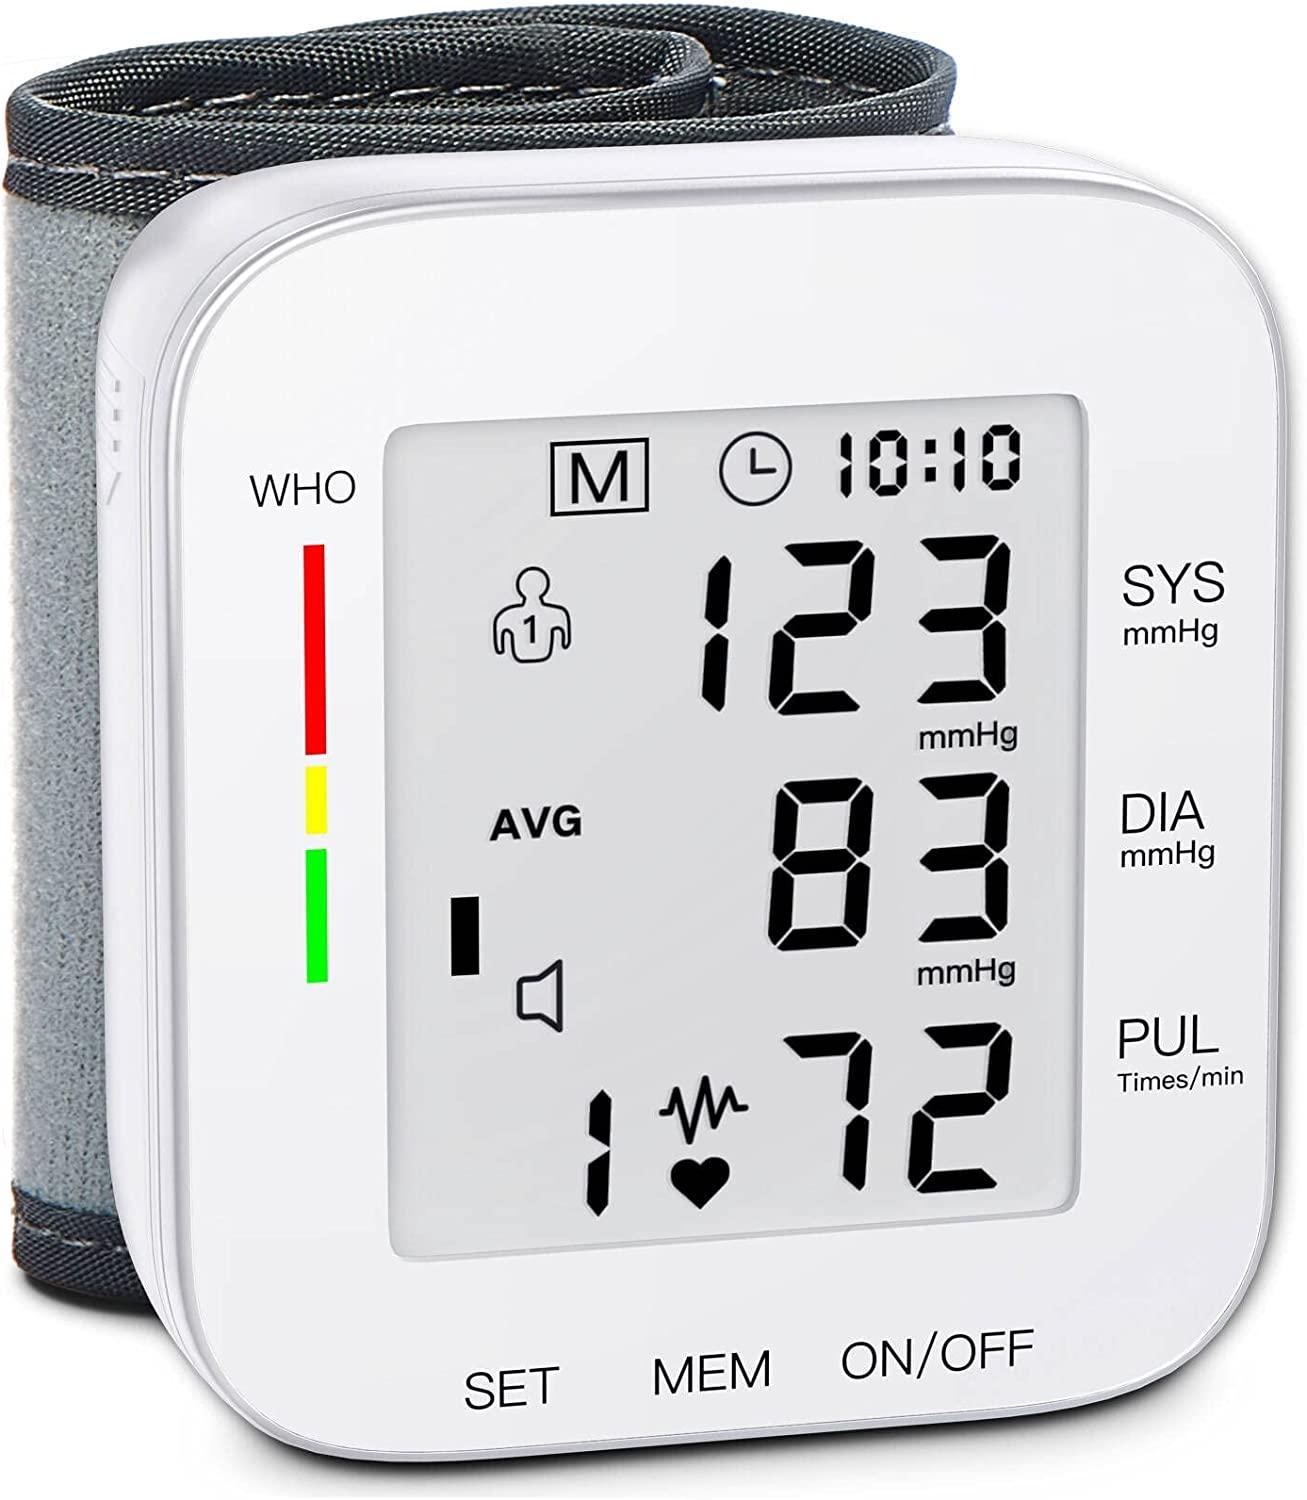 https://www.dontwasteyourmoney.com/wp-content/uploads/2020/07/mmizoo-adjustable-wrist-cuff-lcd-display-blood-pressure-monitor.jpg